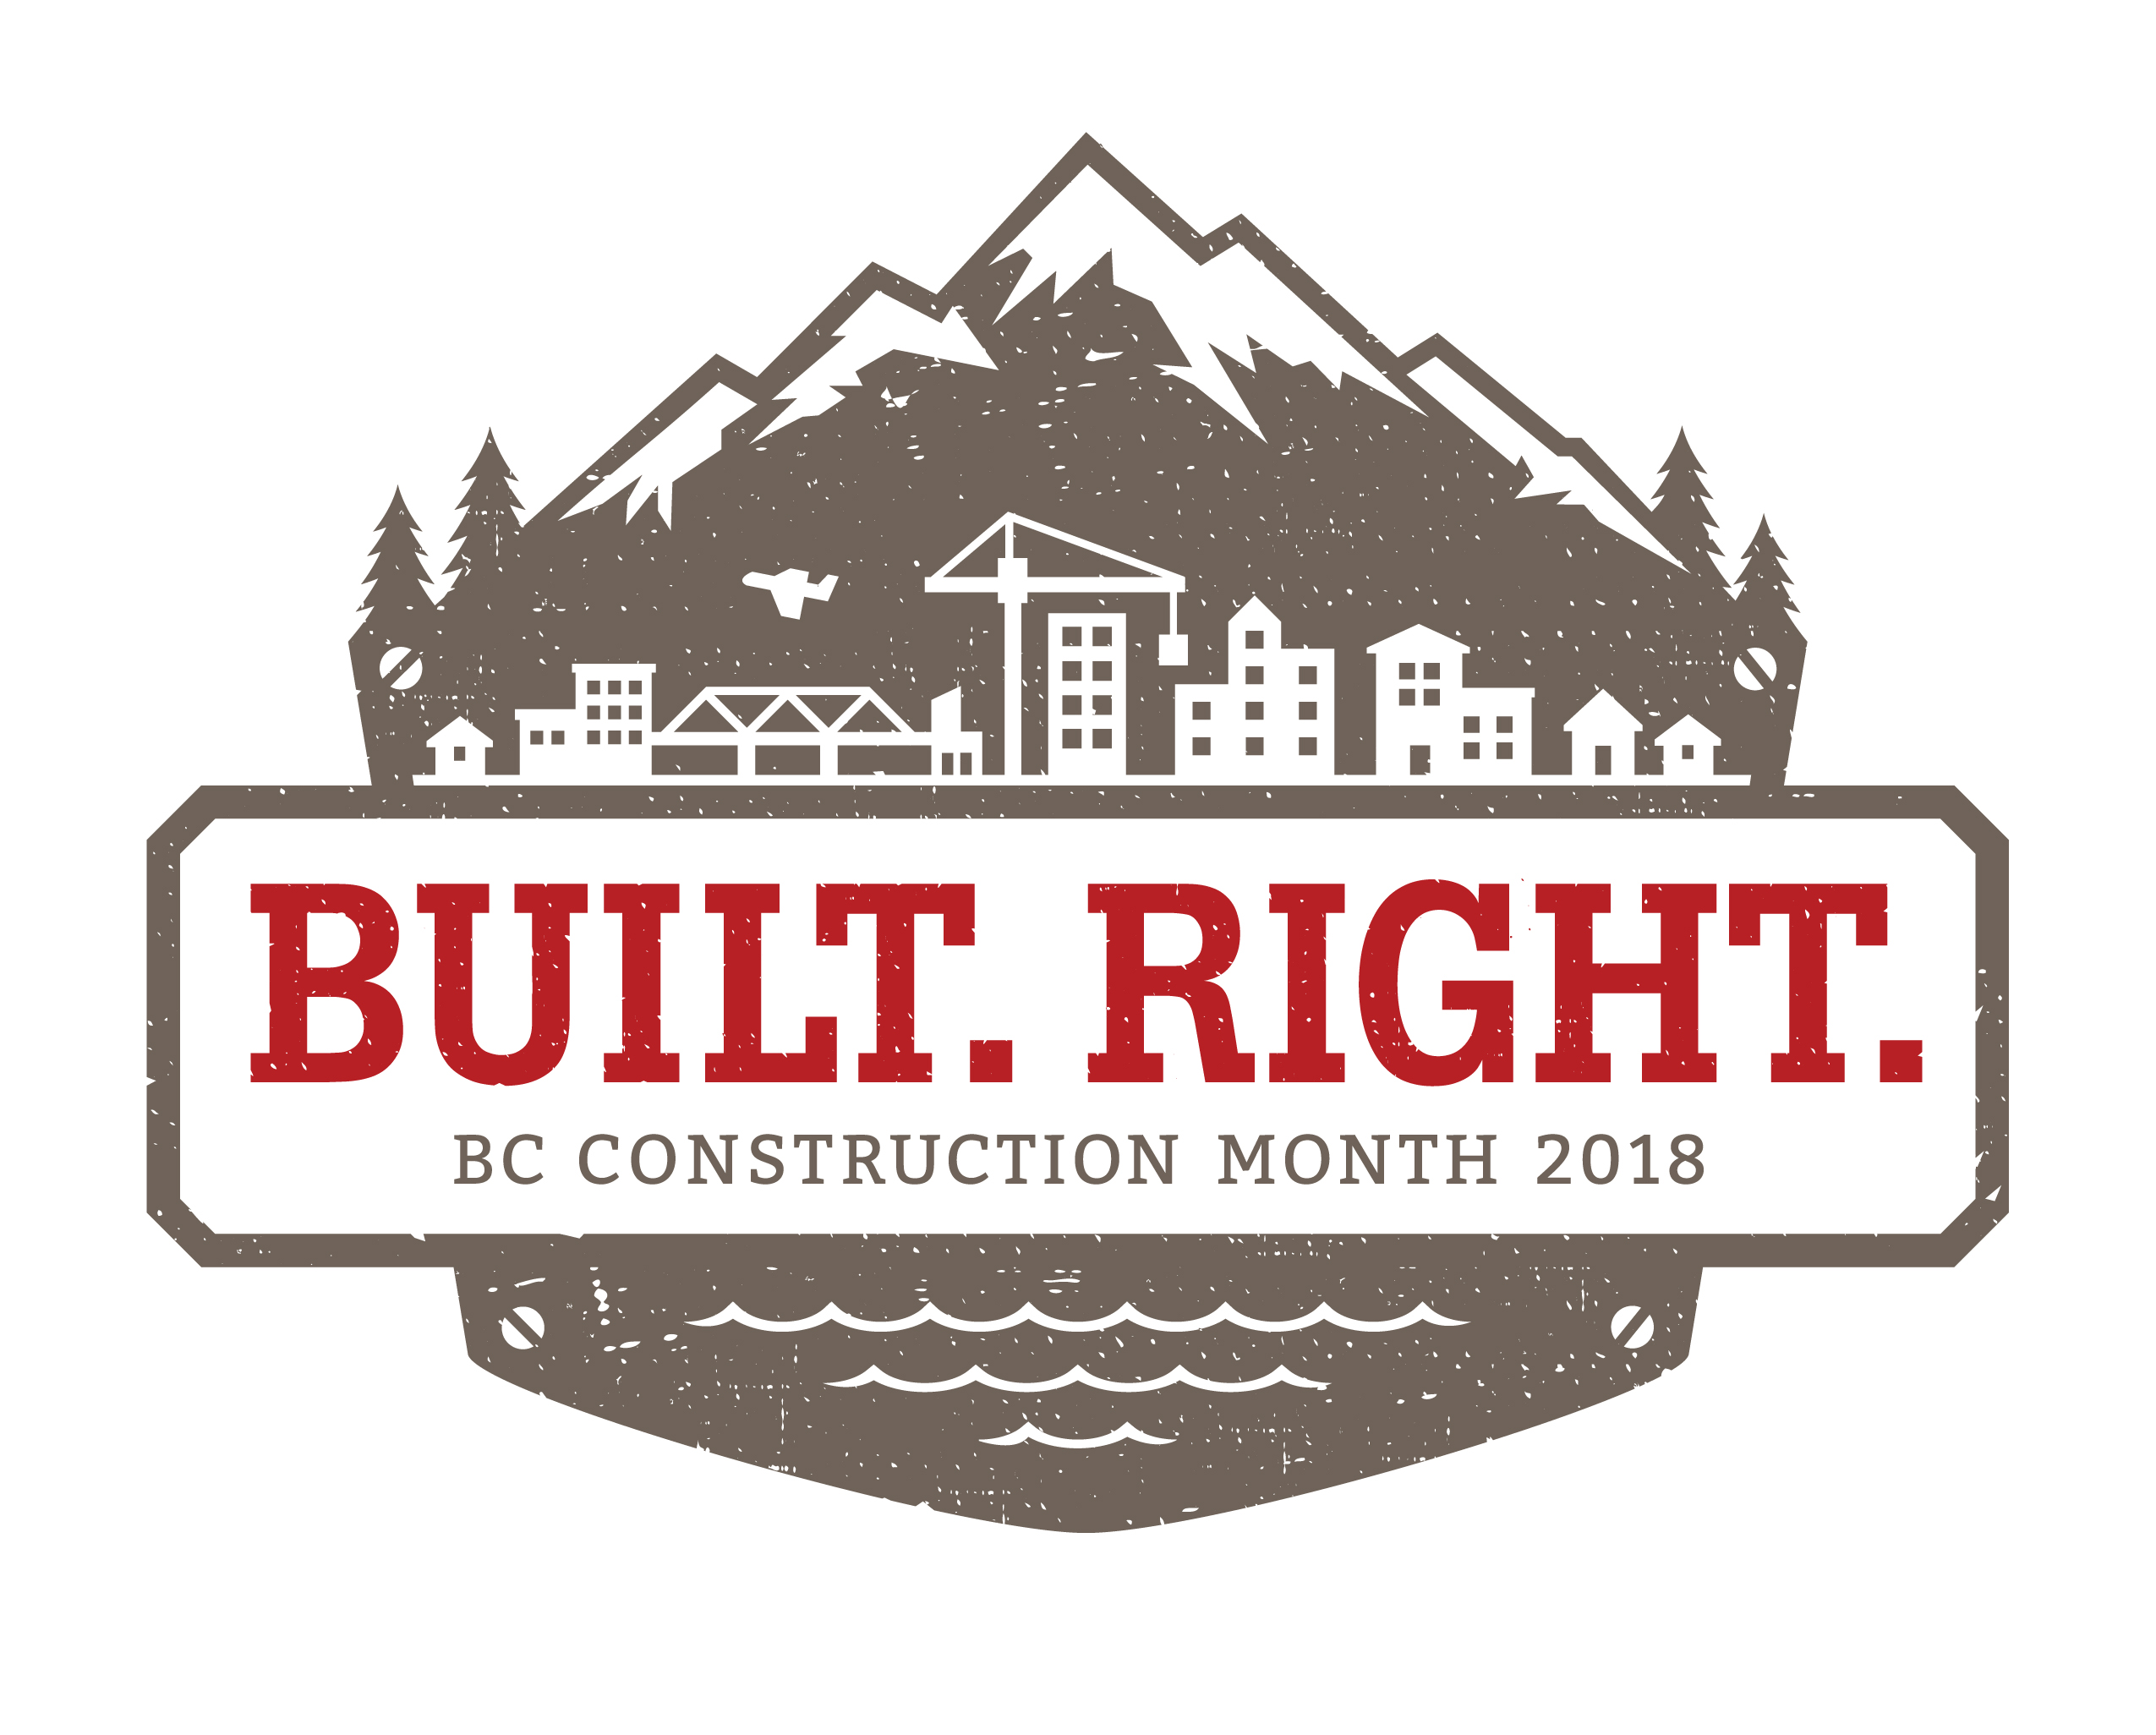 Construction Month